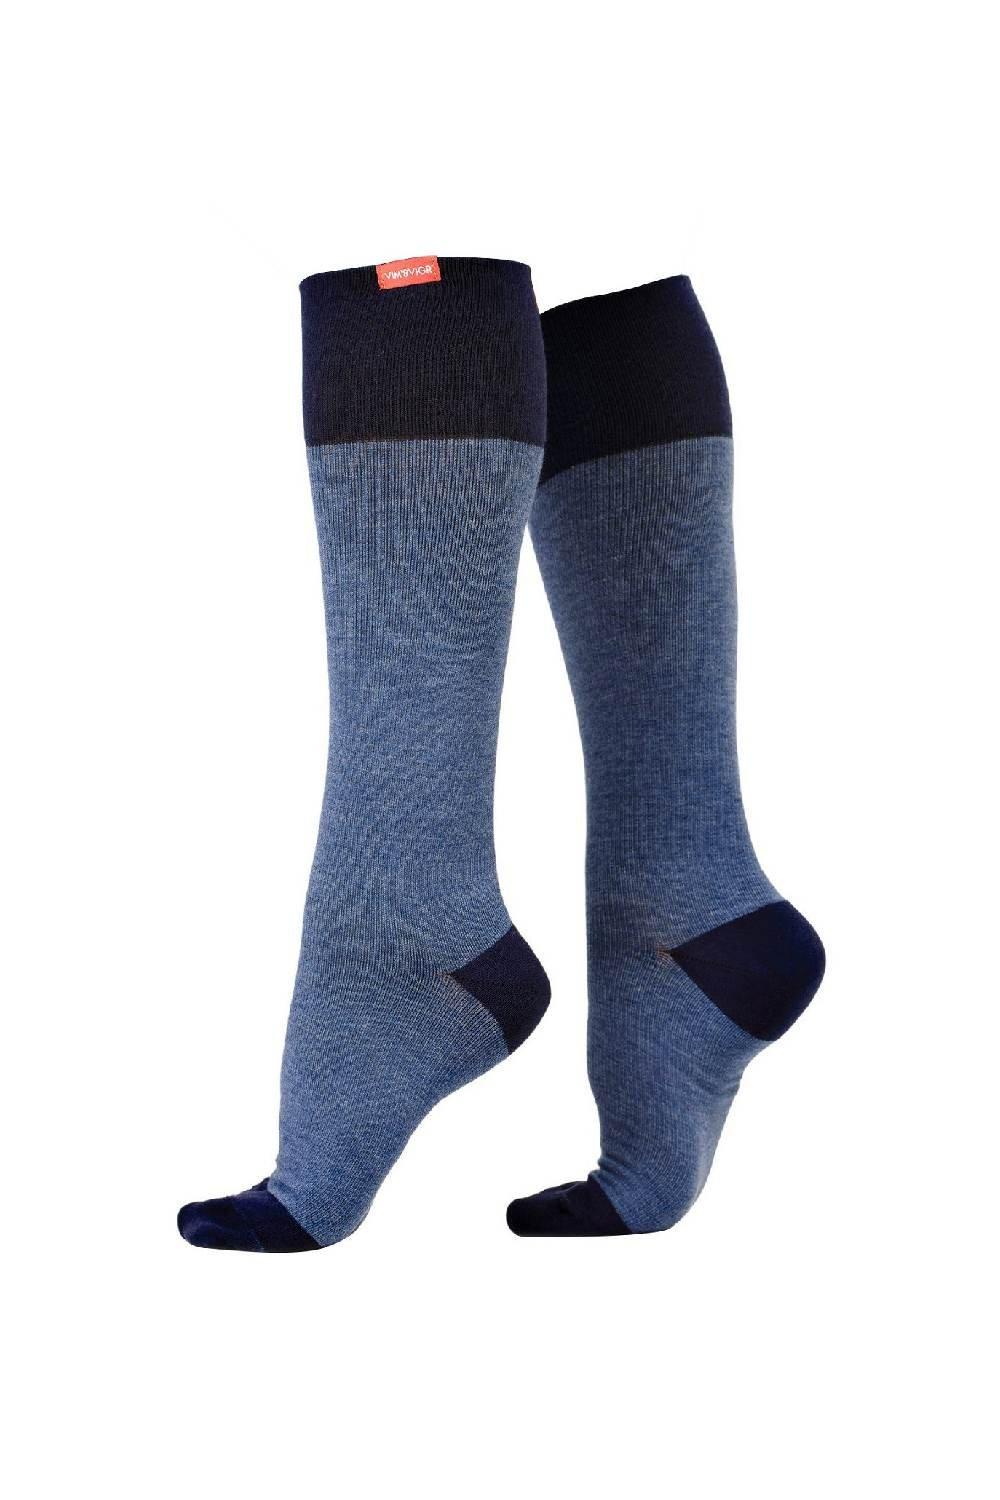 Wide Calf Graduated Compression Socks 30-40 mmhg for Swollen Legs